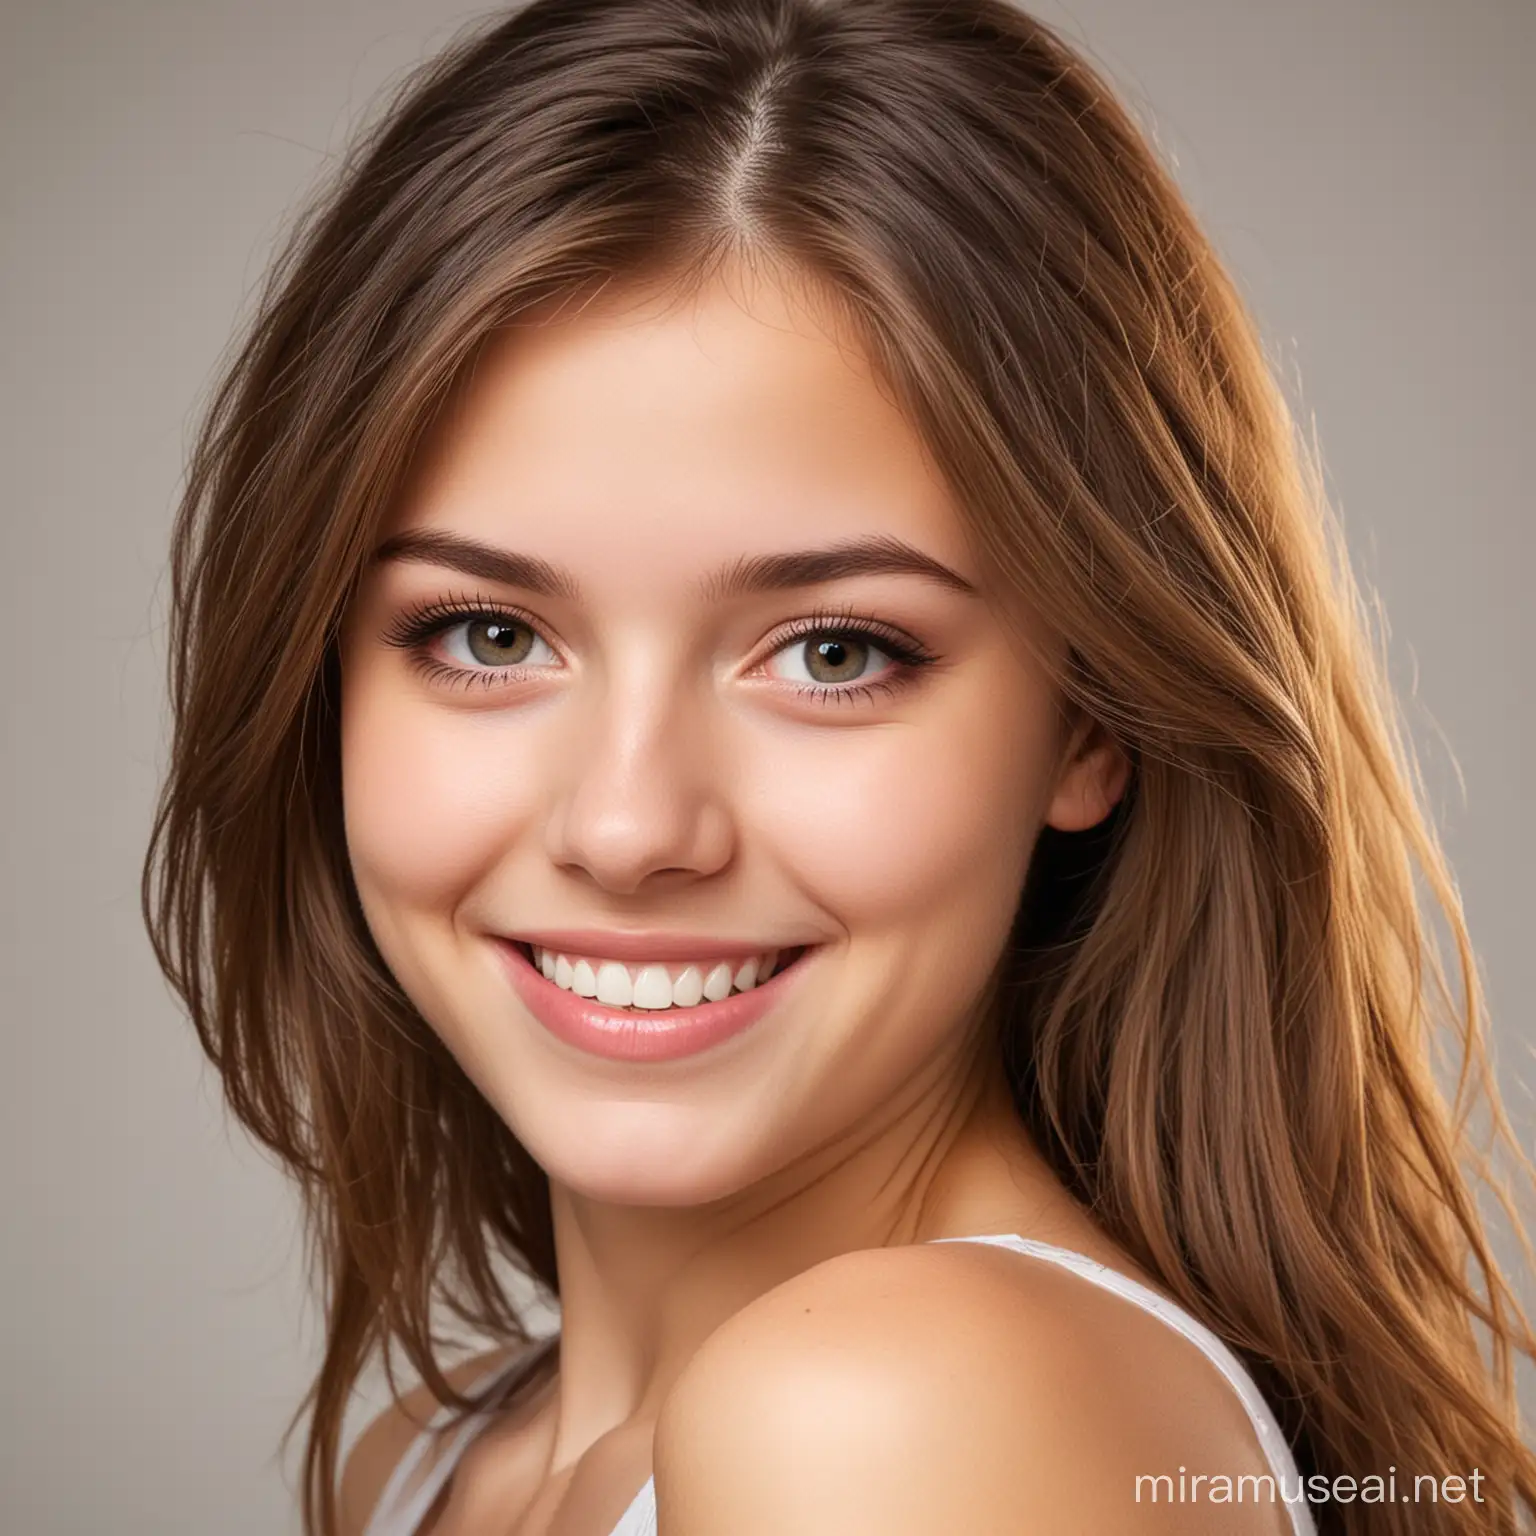 Attractive teen girl, pretty shy smile